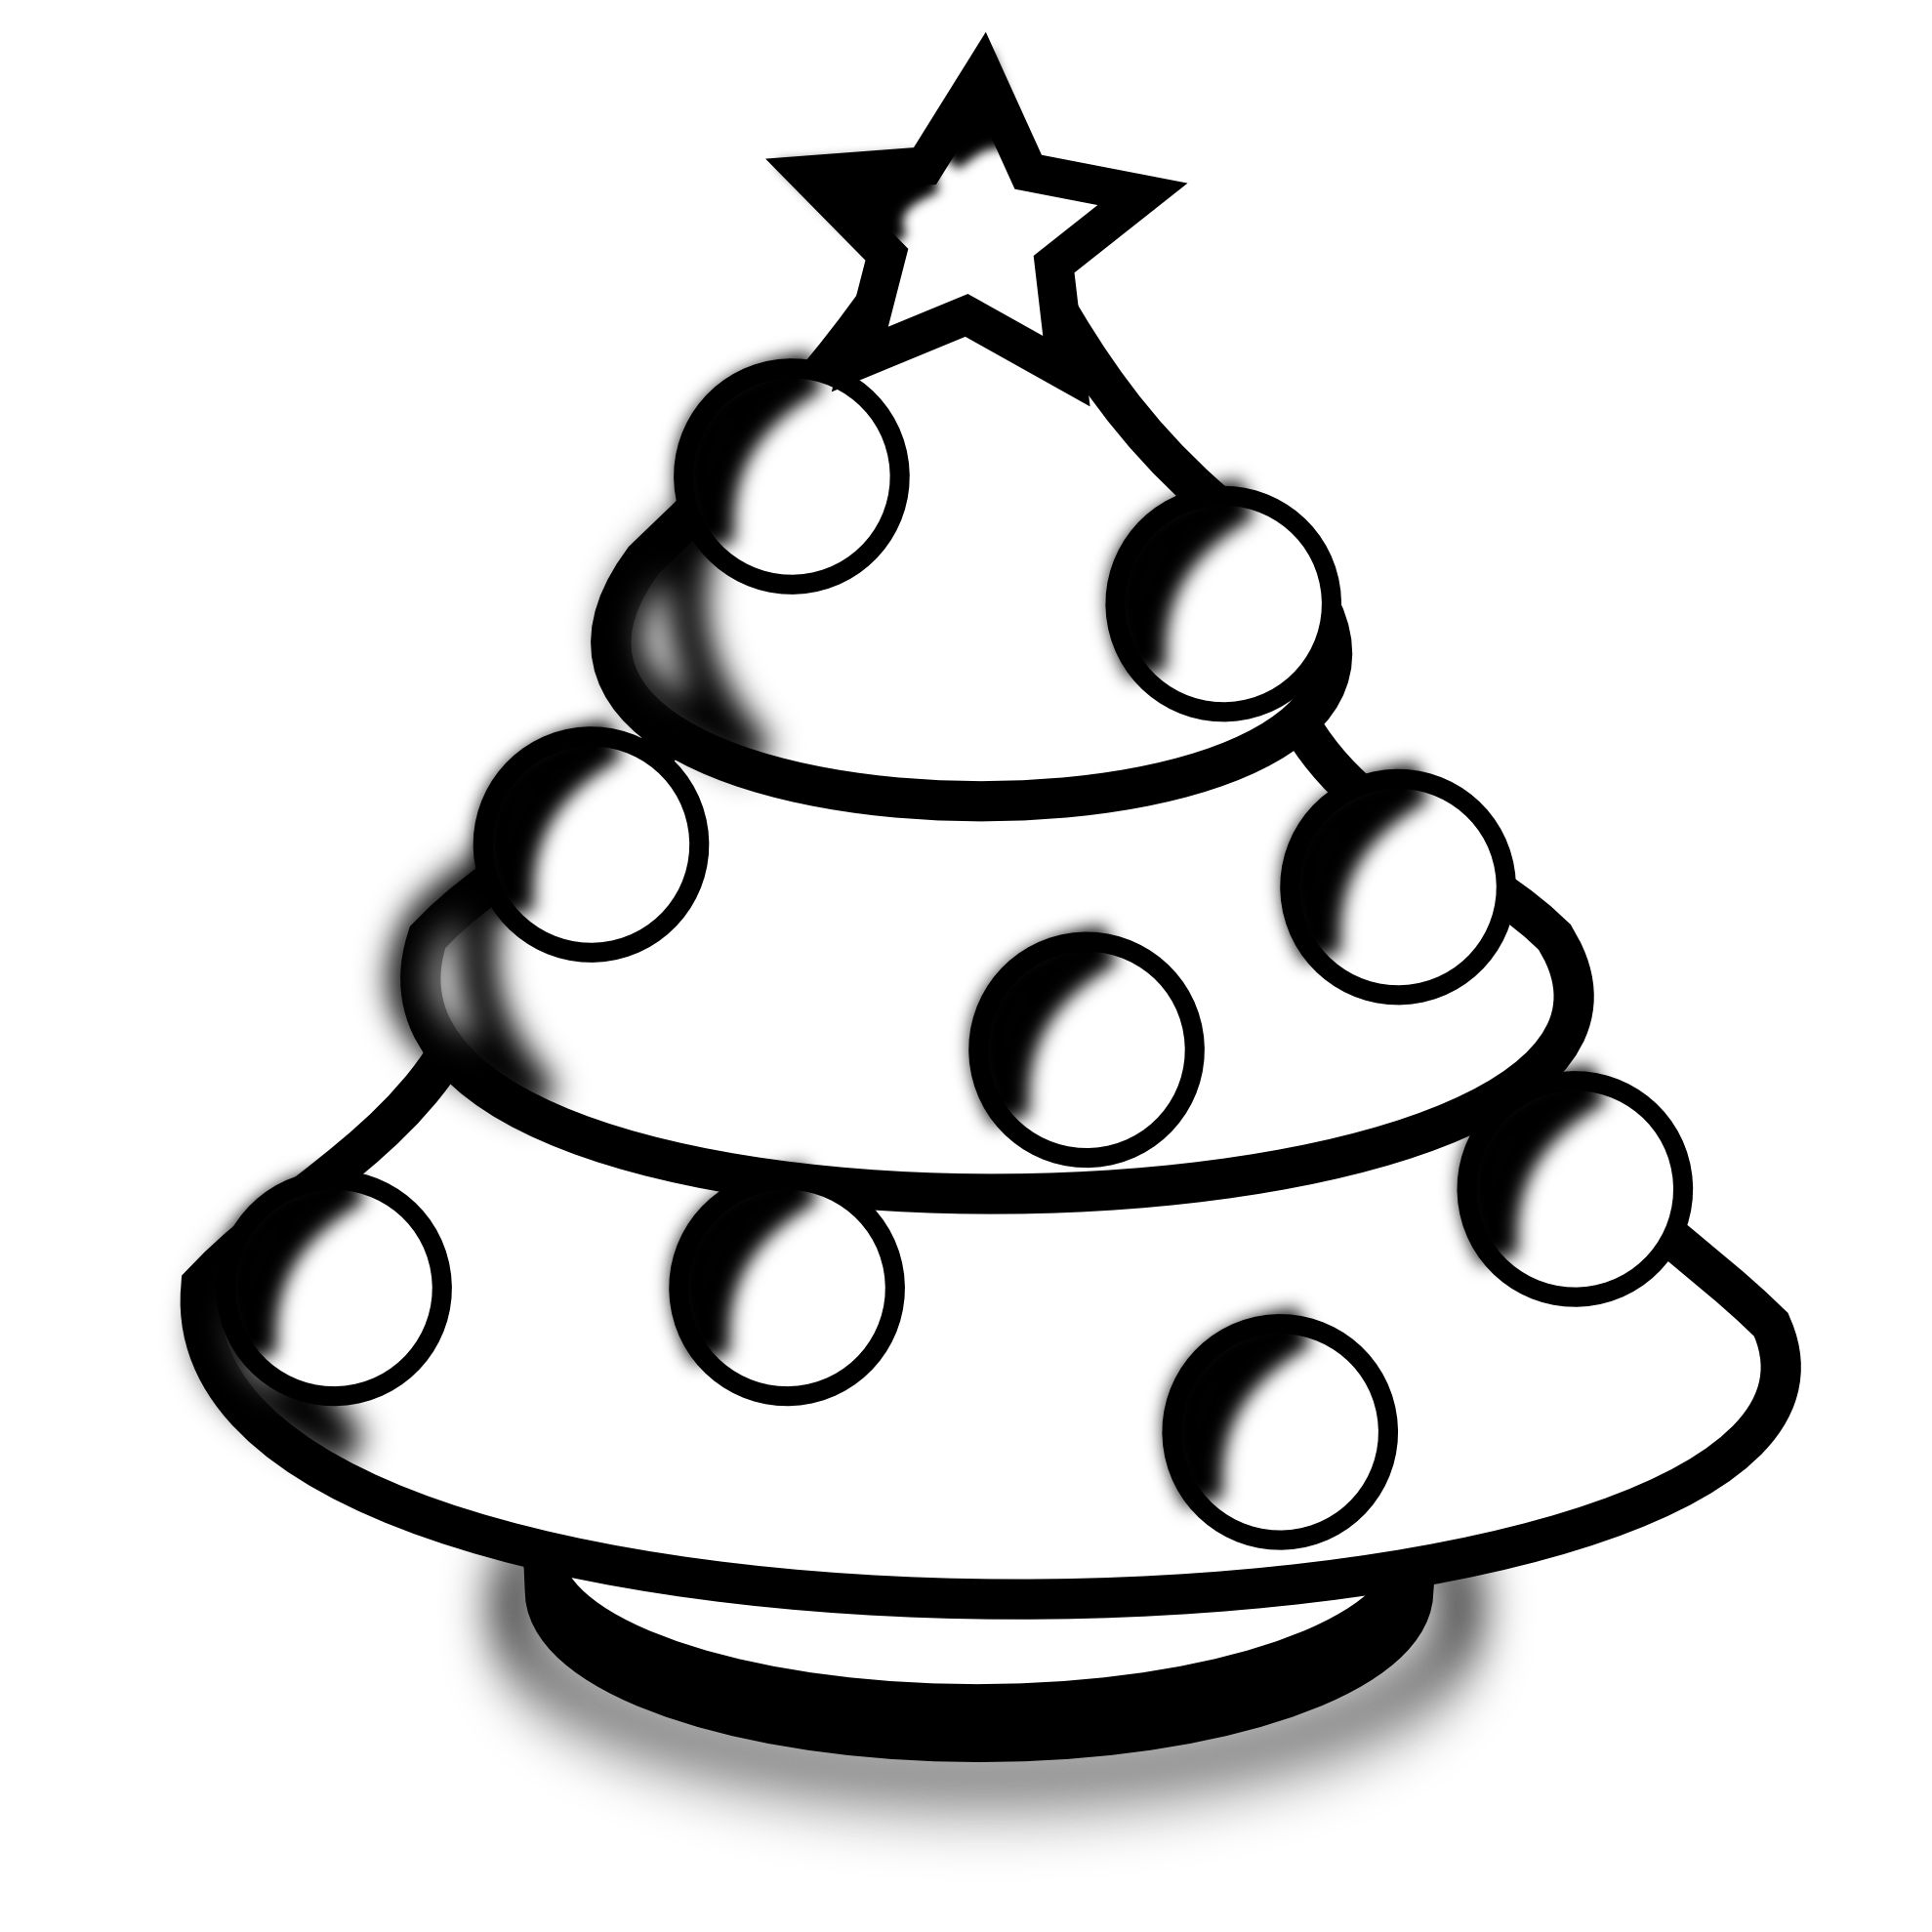 Free Black And White Christmas Wallpaper, Download Free Clip Art, Free Clip Art on Clipart Library